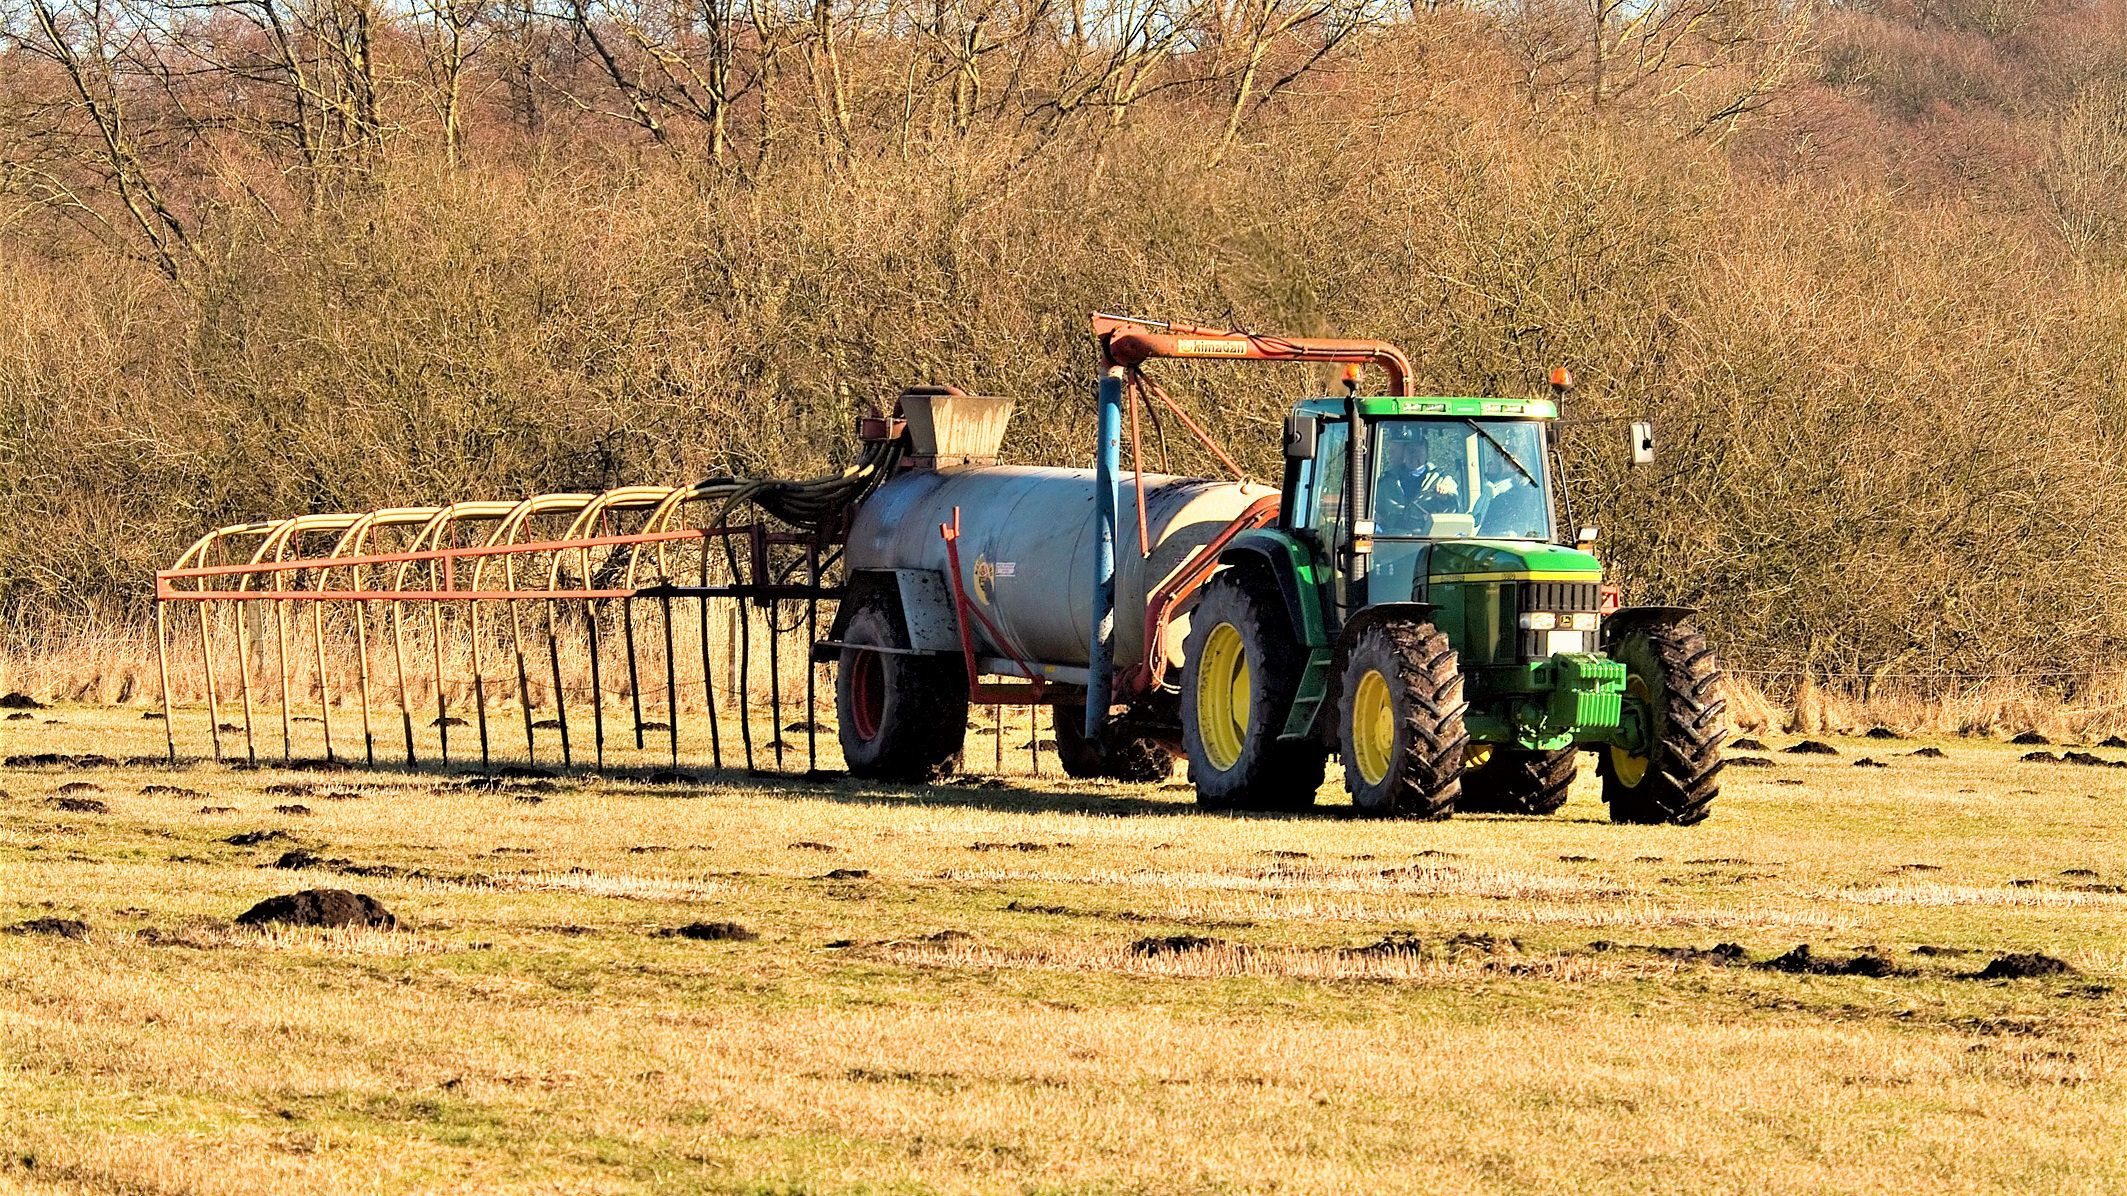 En traktor spreder gylle på marken